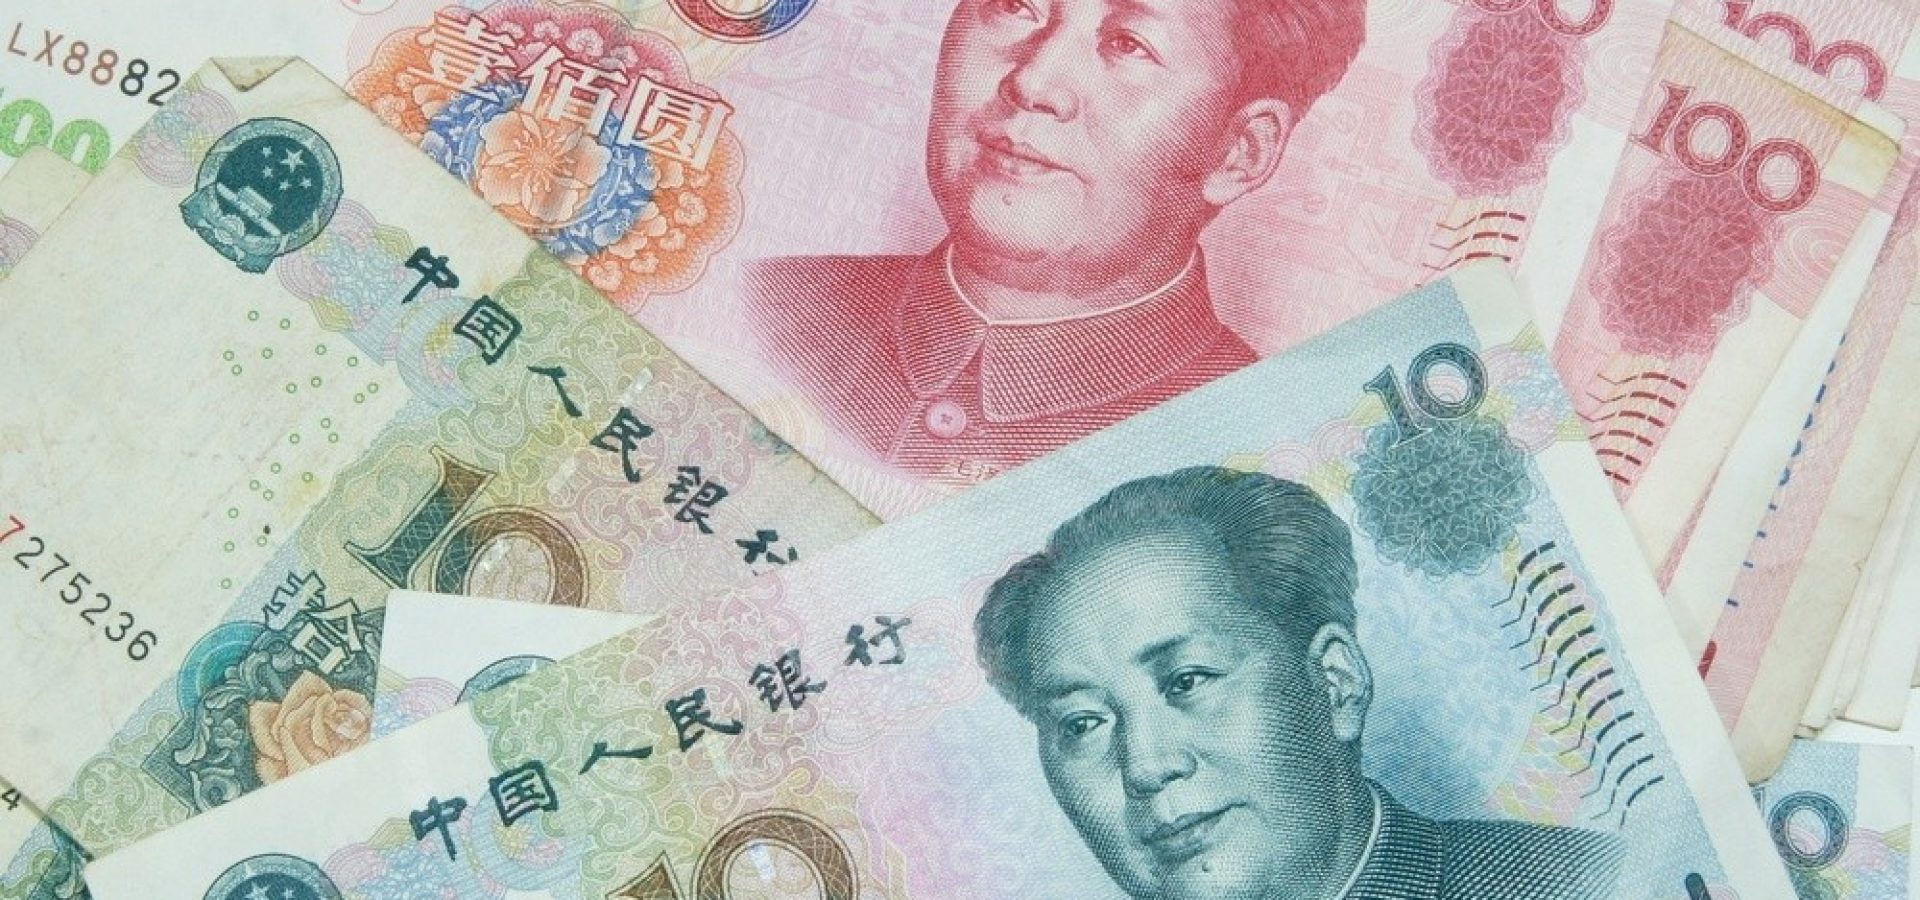 Wibest – Yuan: Chinese yuan bills